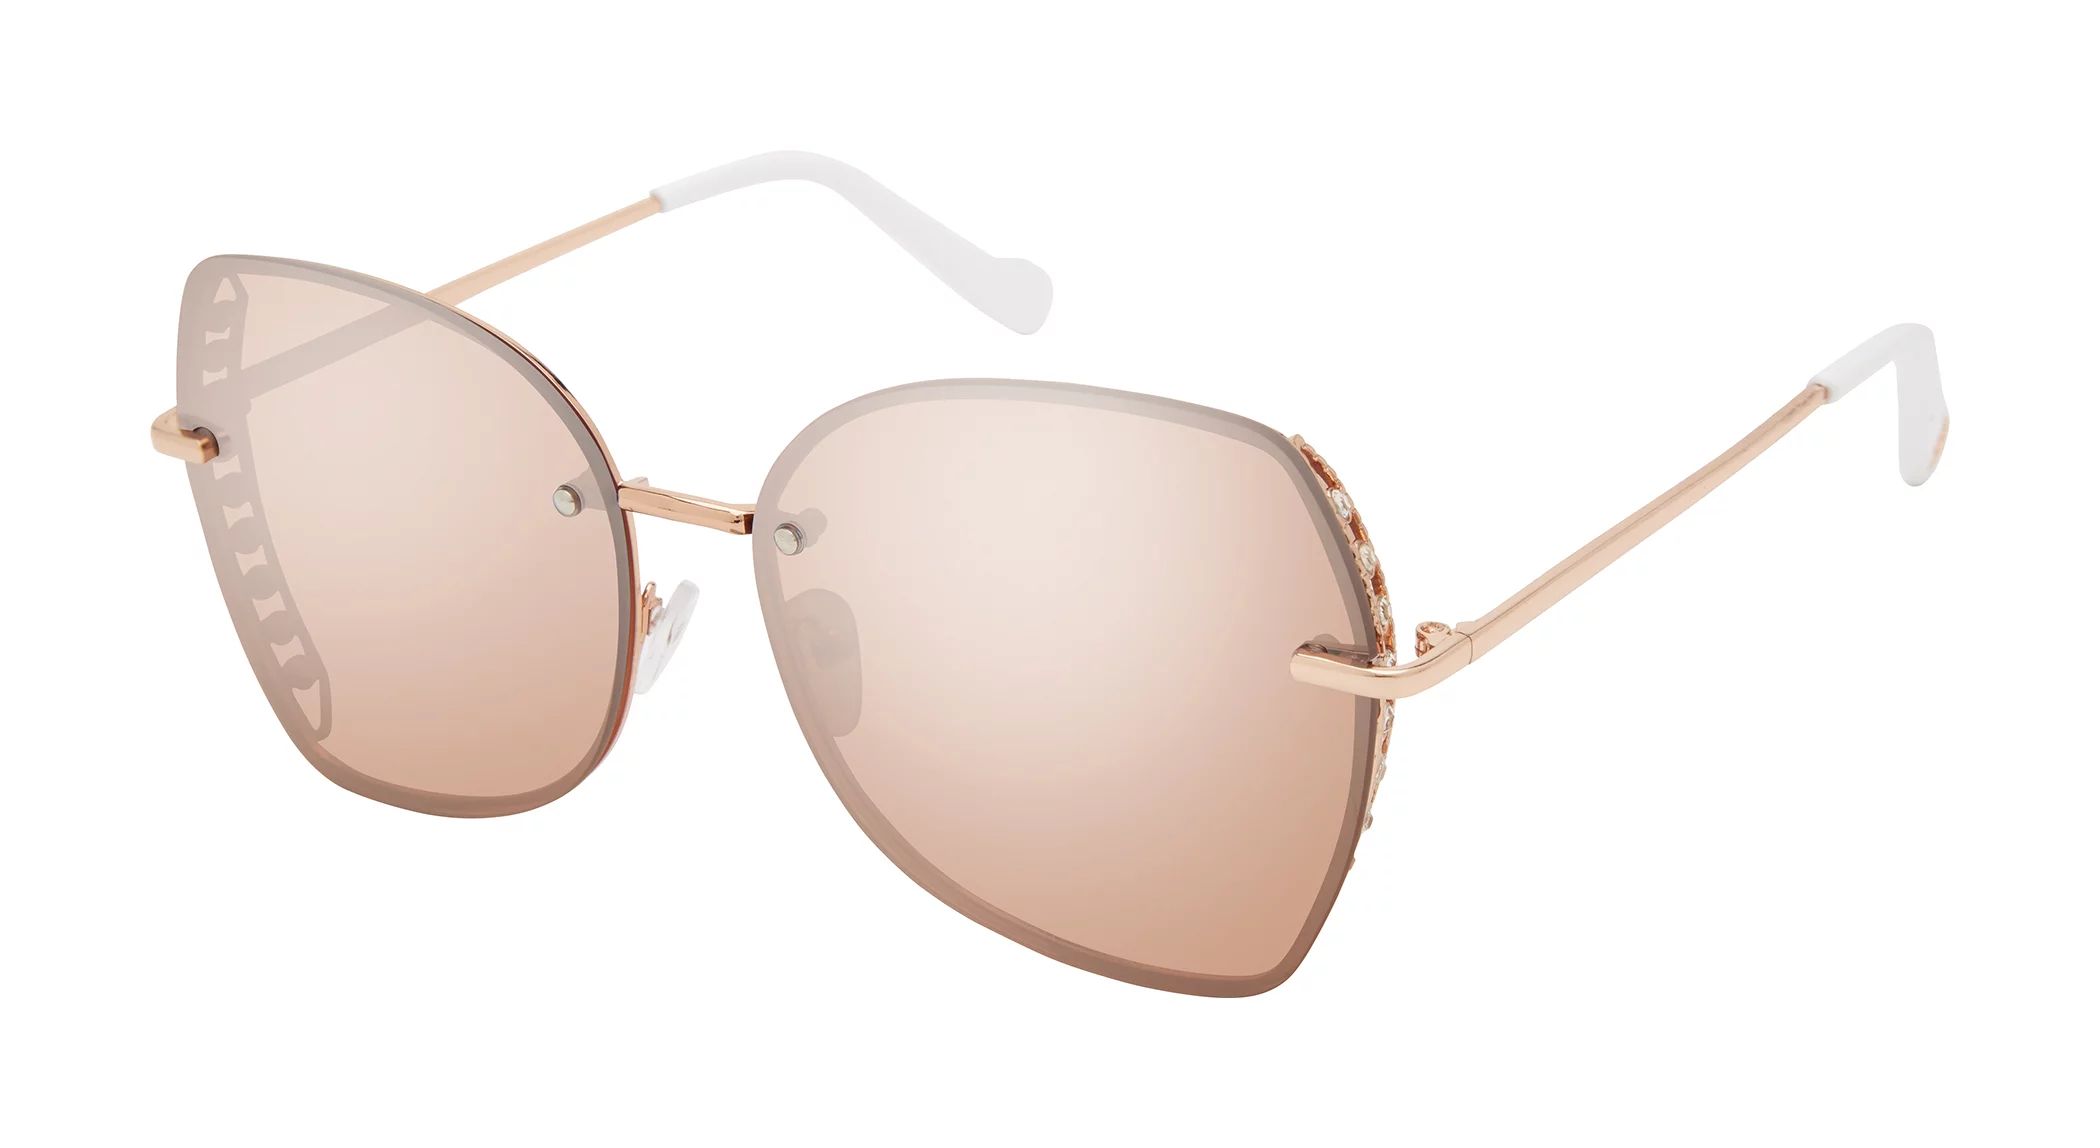 Jessica Simpson J5874 Adult UV Protective Women's Butterfly Sunglasses | Walmart (US)